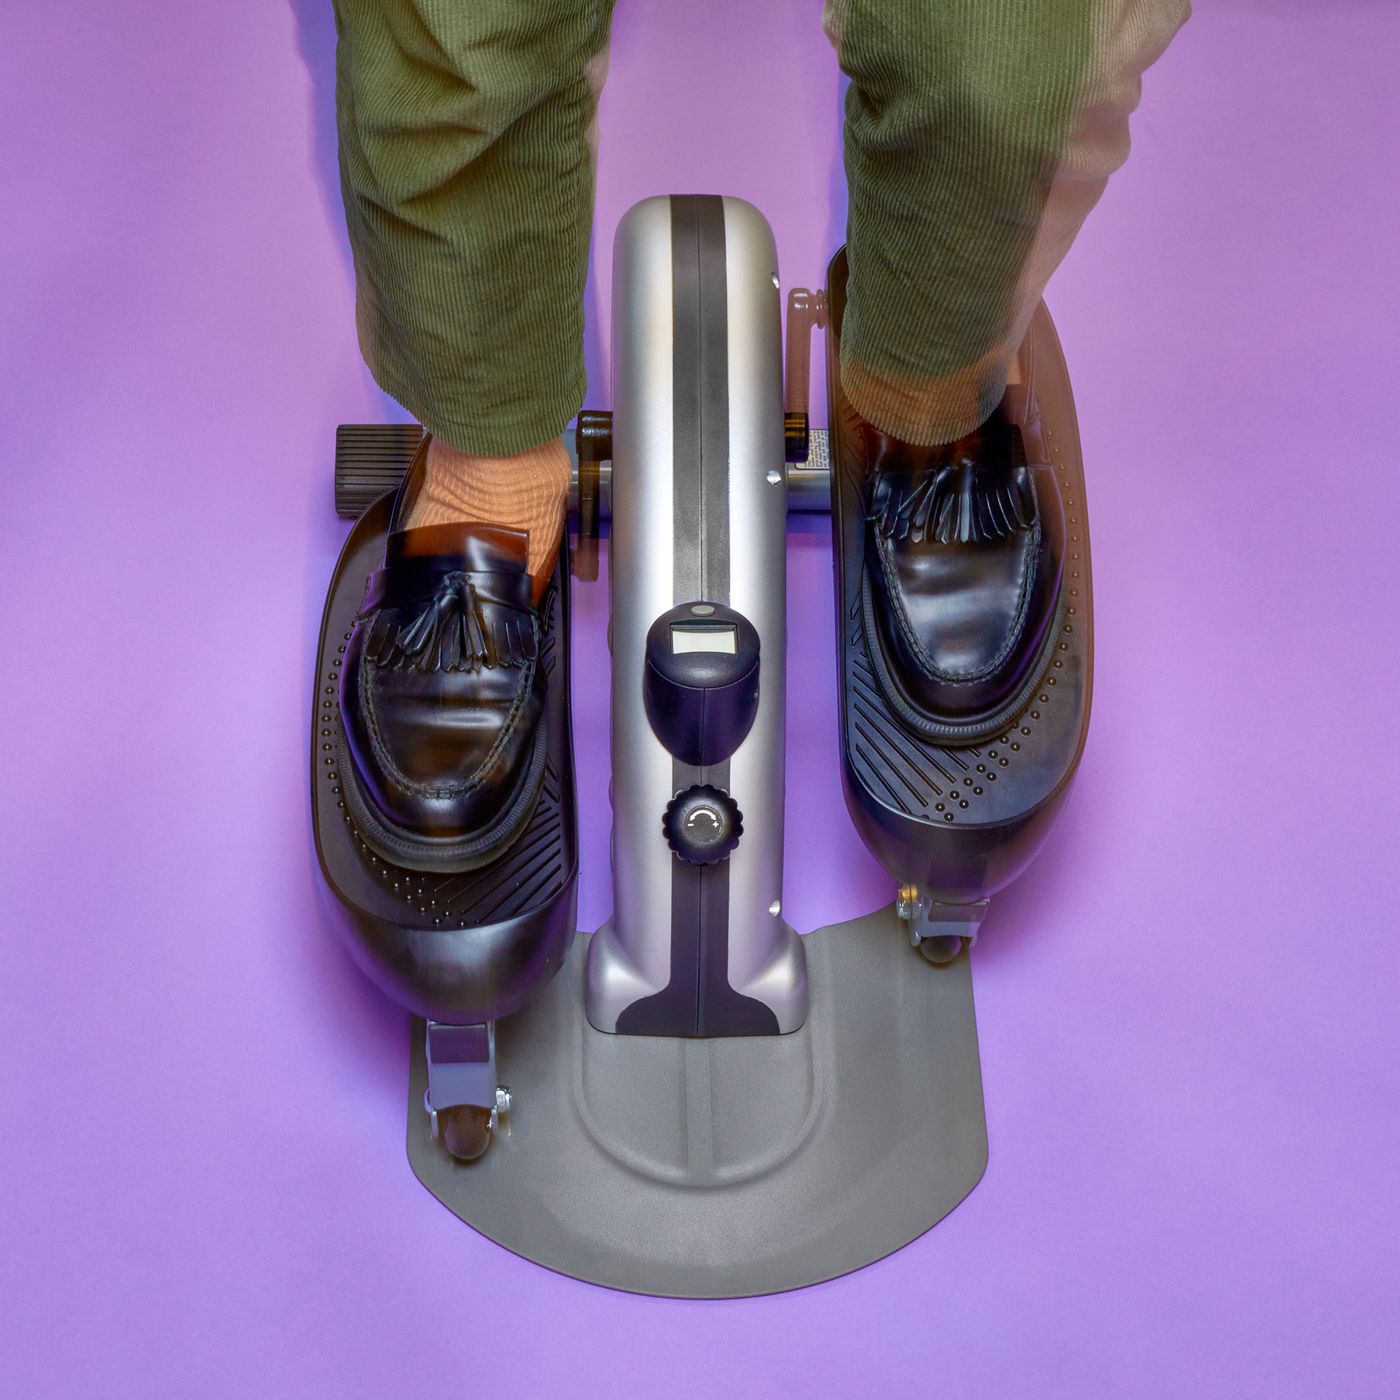 Wakeman Portable Fitness Pedal Stationary Under Desk Exercise